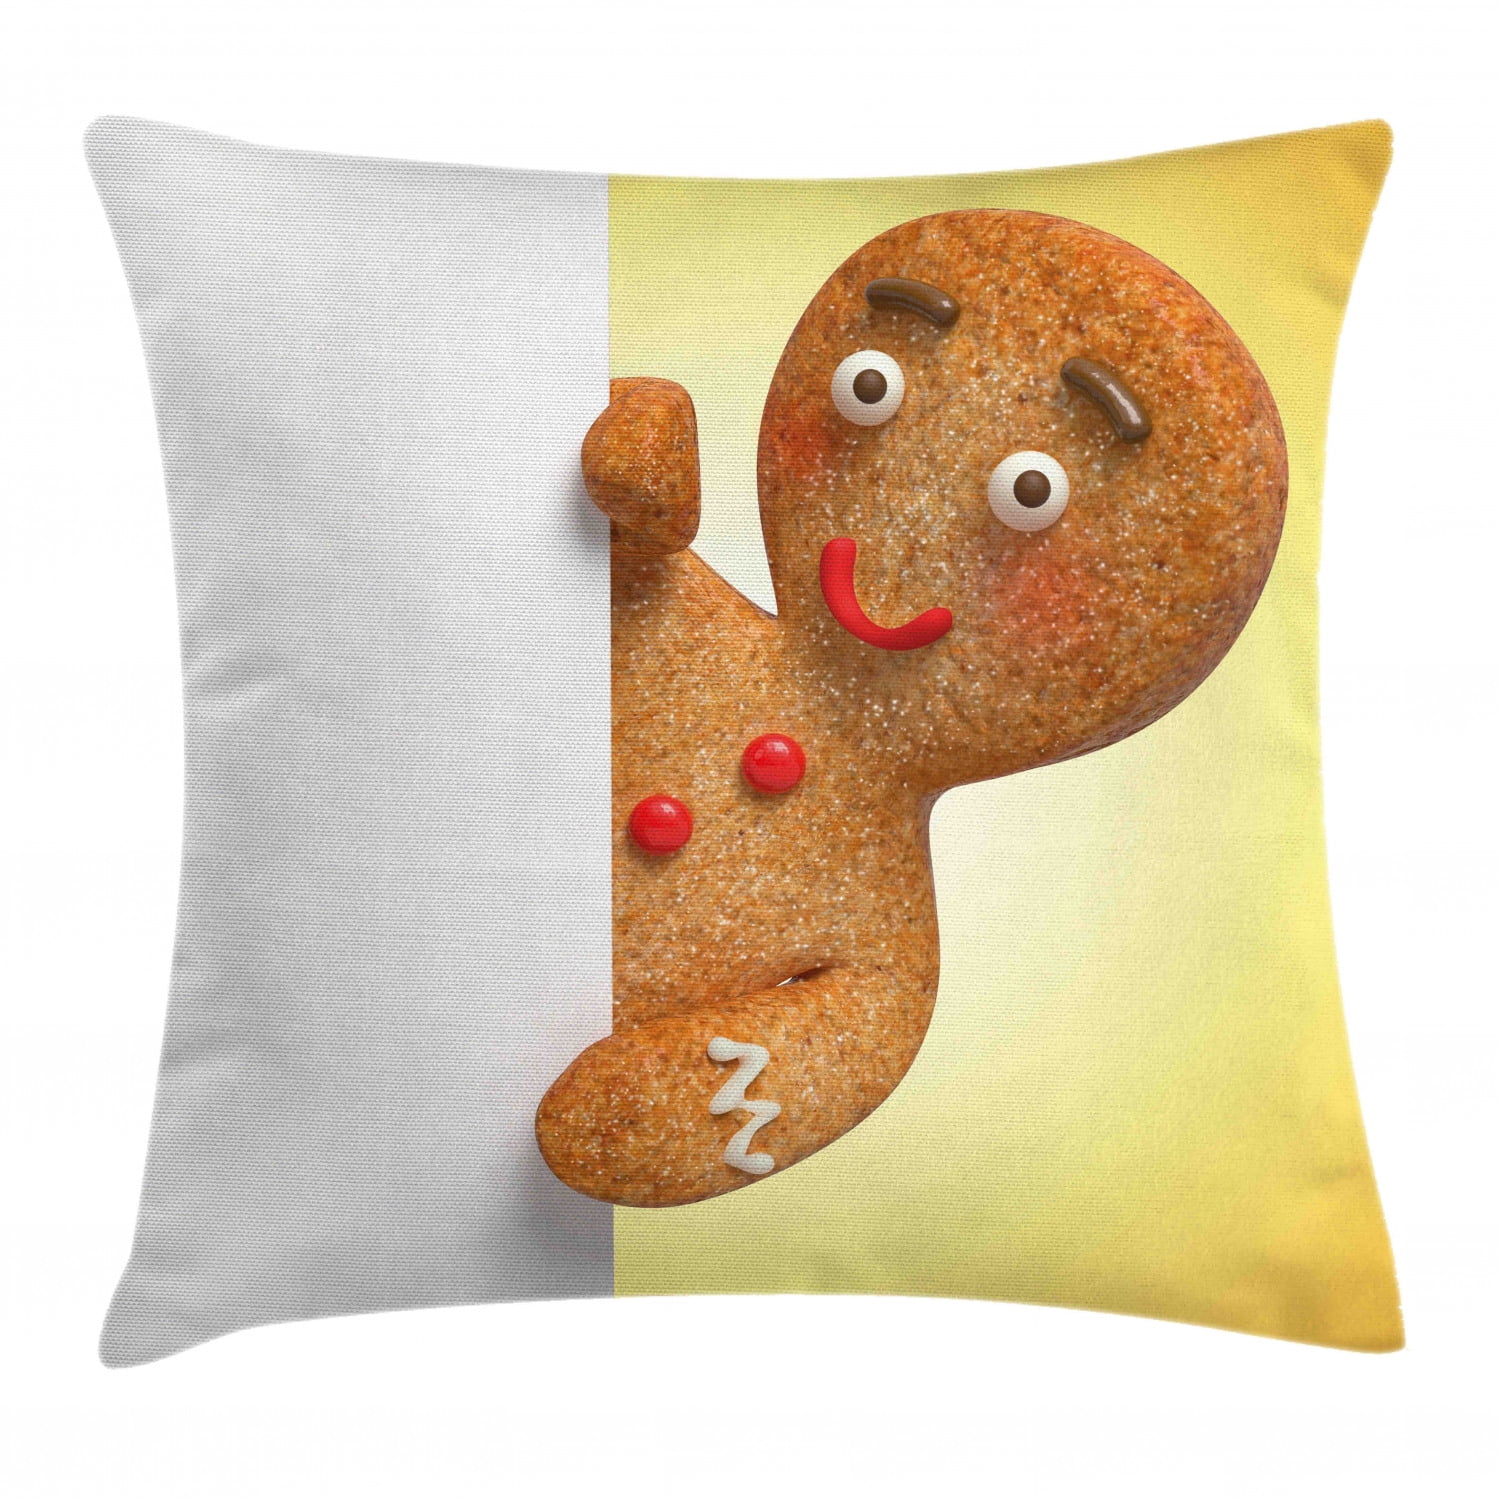 Pillow cover Pillow Sham Decorative Christmas Gingerbread Man Cushion Cover 16 Natural Beige Orange Design